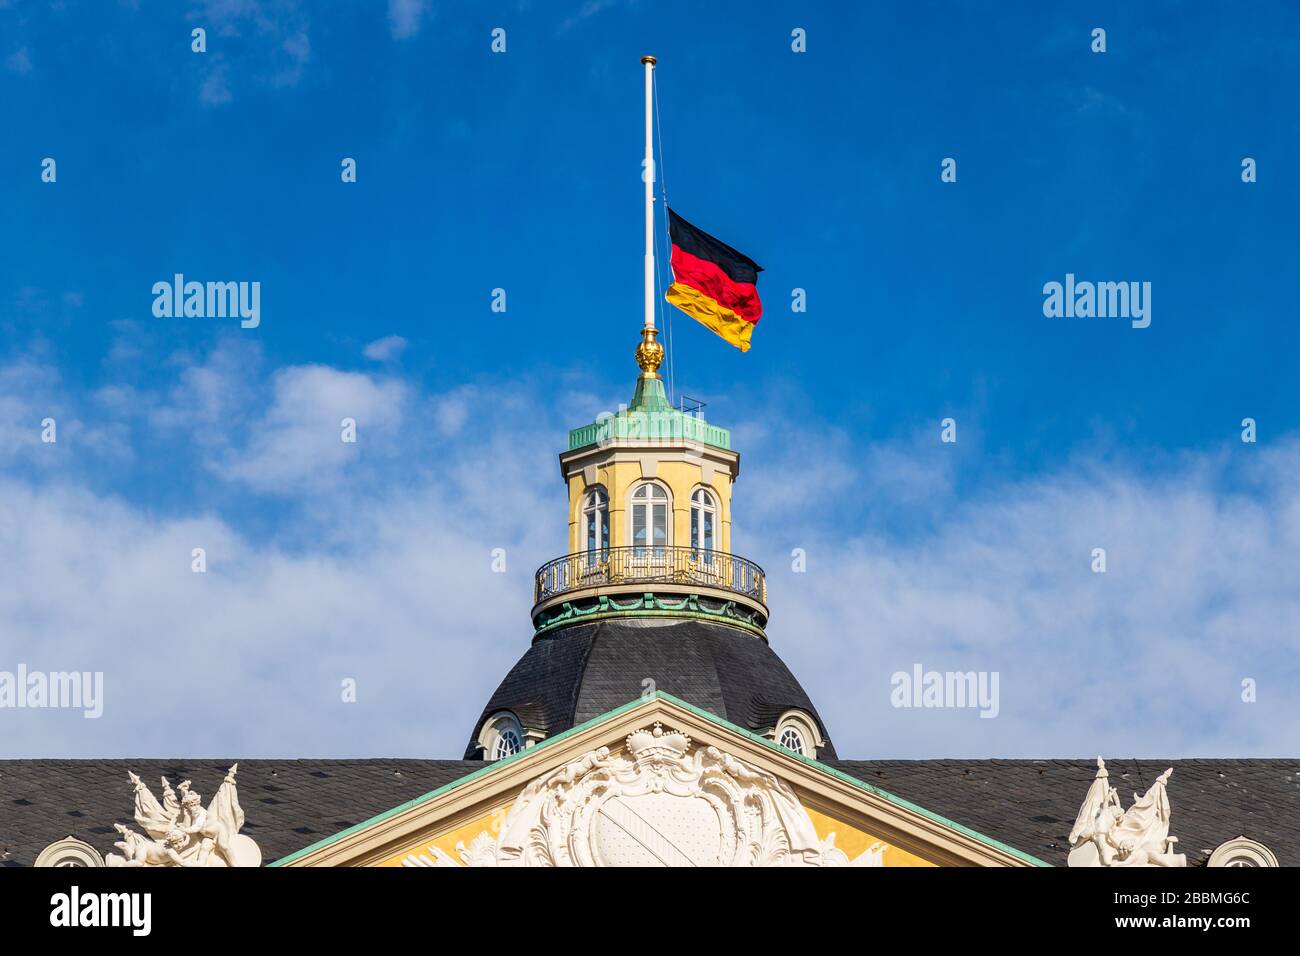 Vista ravvicinata sulla bandiera tedesca a Halfmast, auf Halbmast, sul tetto della torre del castello di Karlsruhe. Baden-Württemberg, Germania Foto Stock